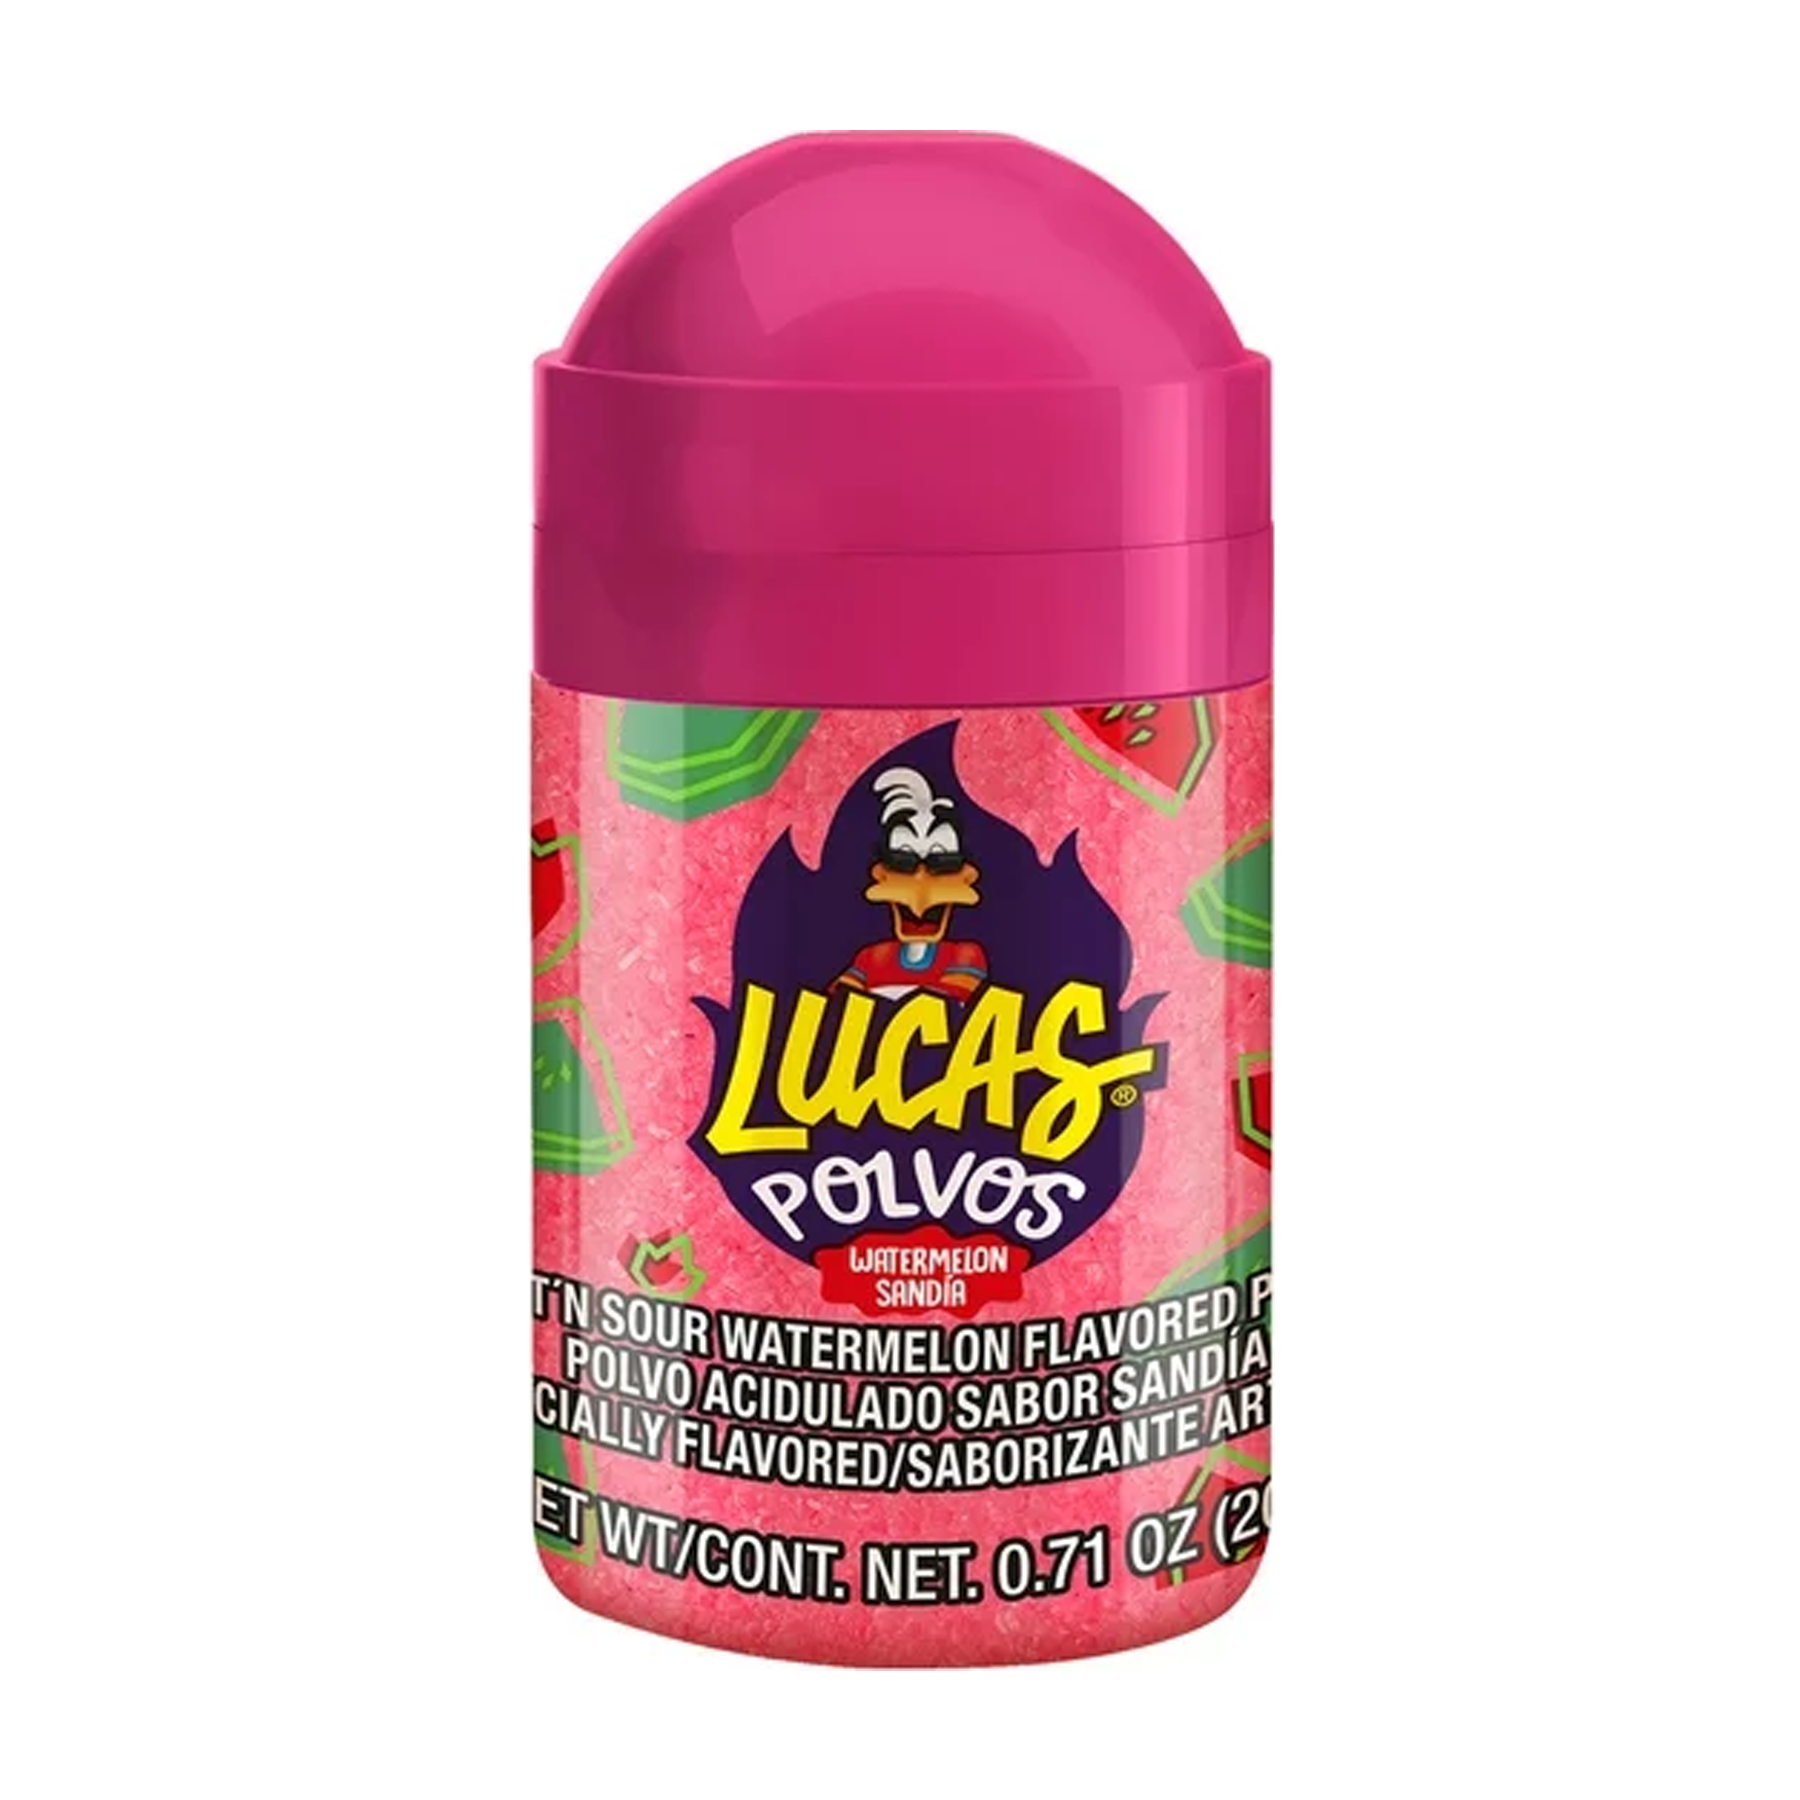 Lucas Polvos Baby Watermelon Sanda Powder (0.71Oz)